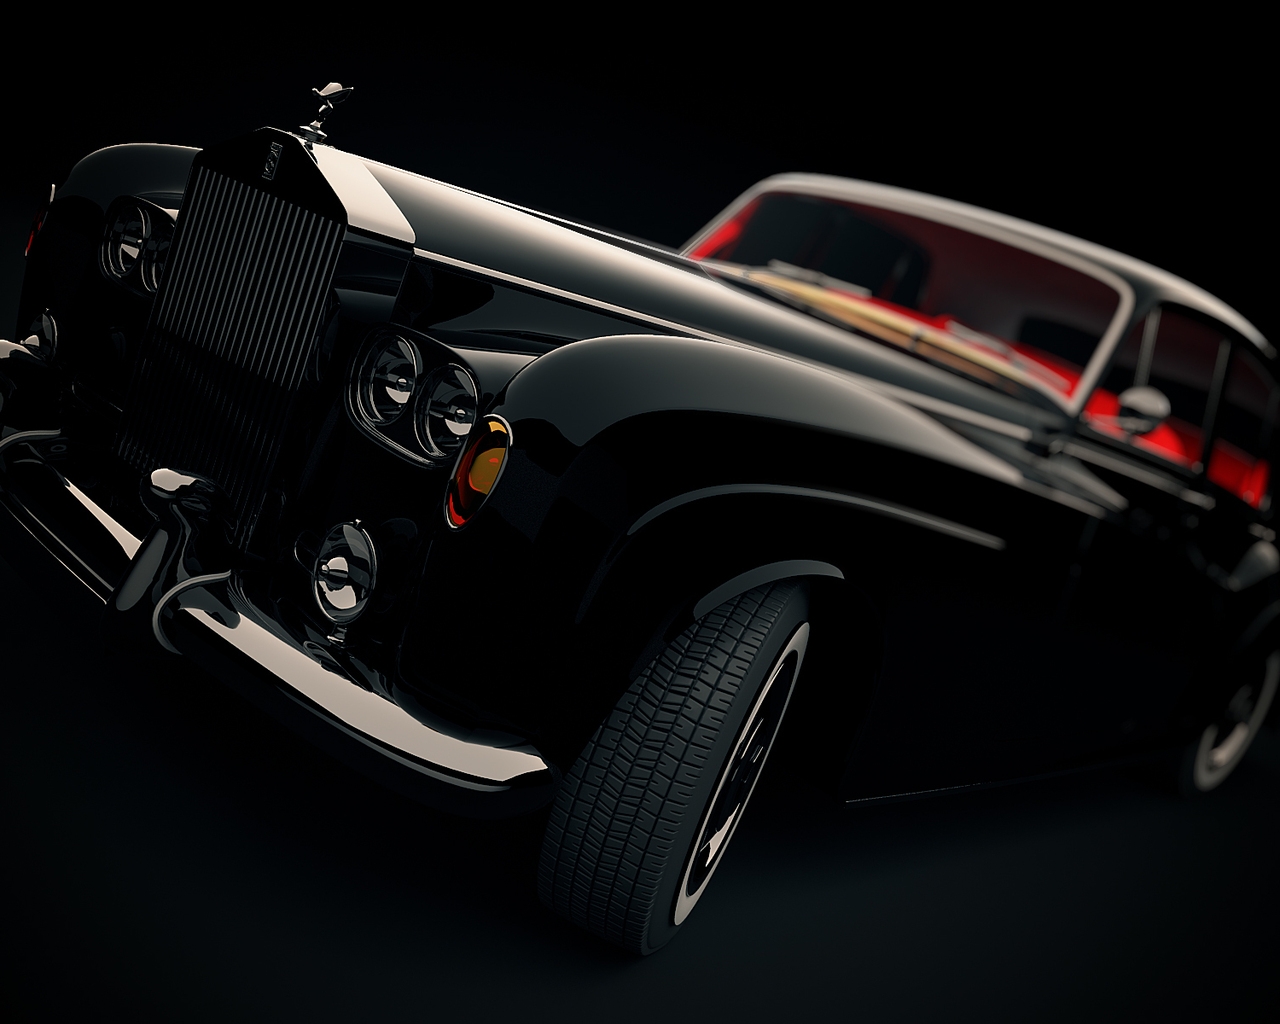 Rolls Royce Phantom III for 1280 x 1024 resolution